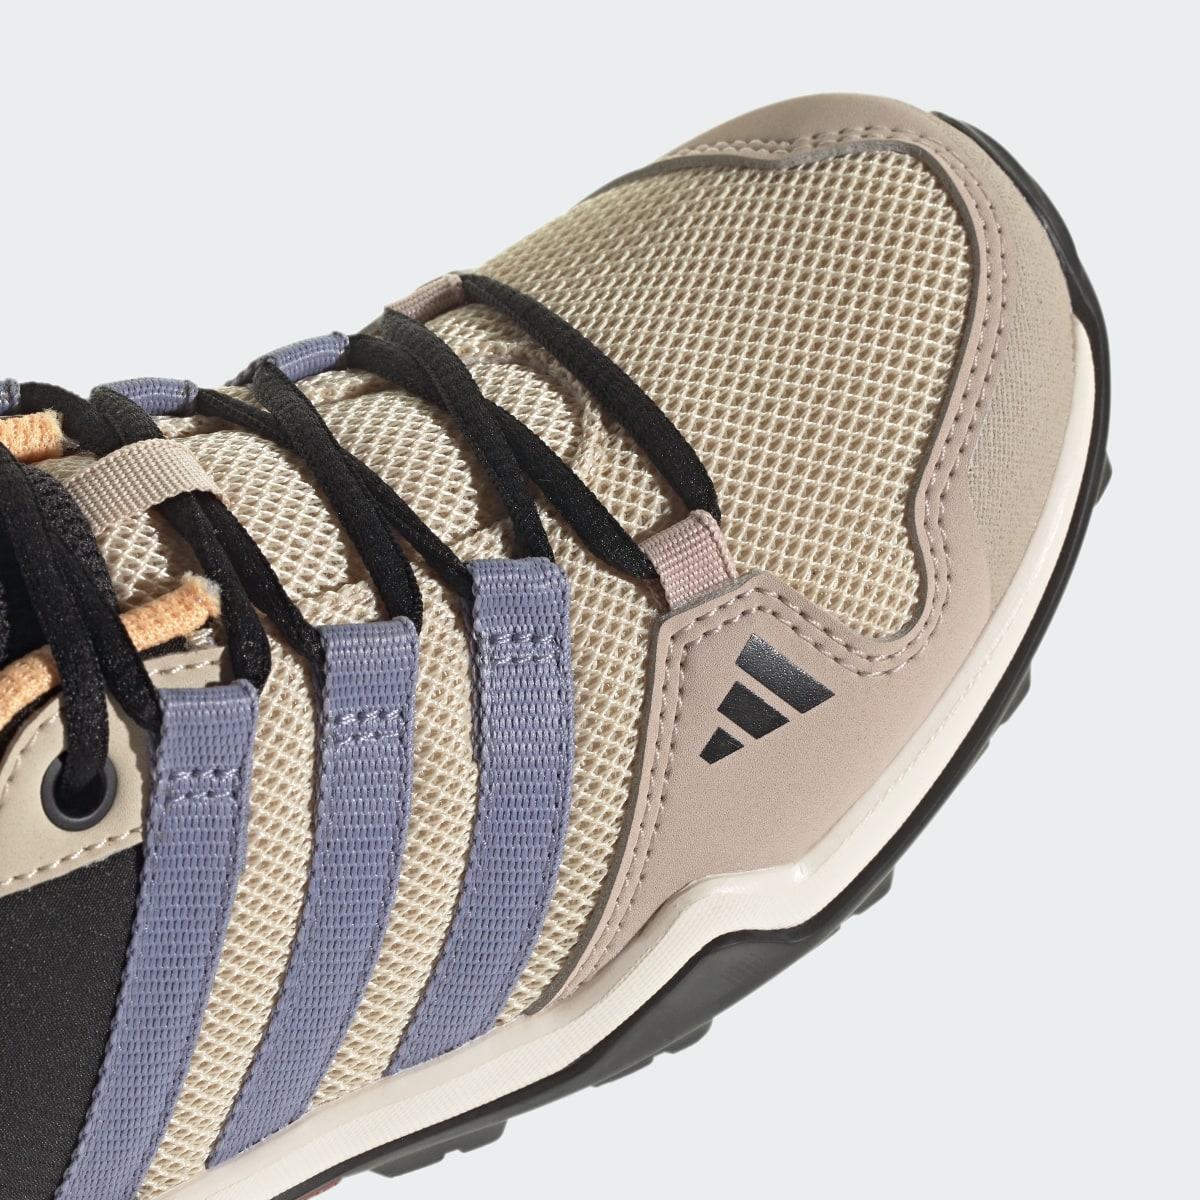 Adidas Terrex AX2R Hiking Shoes. 10